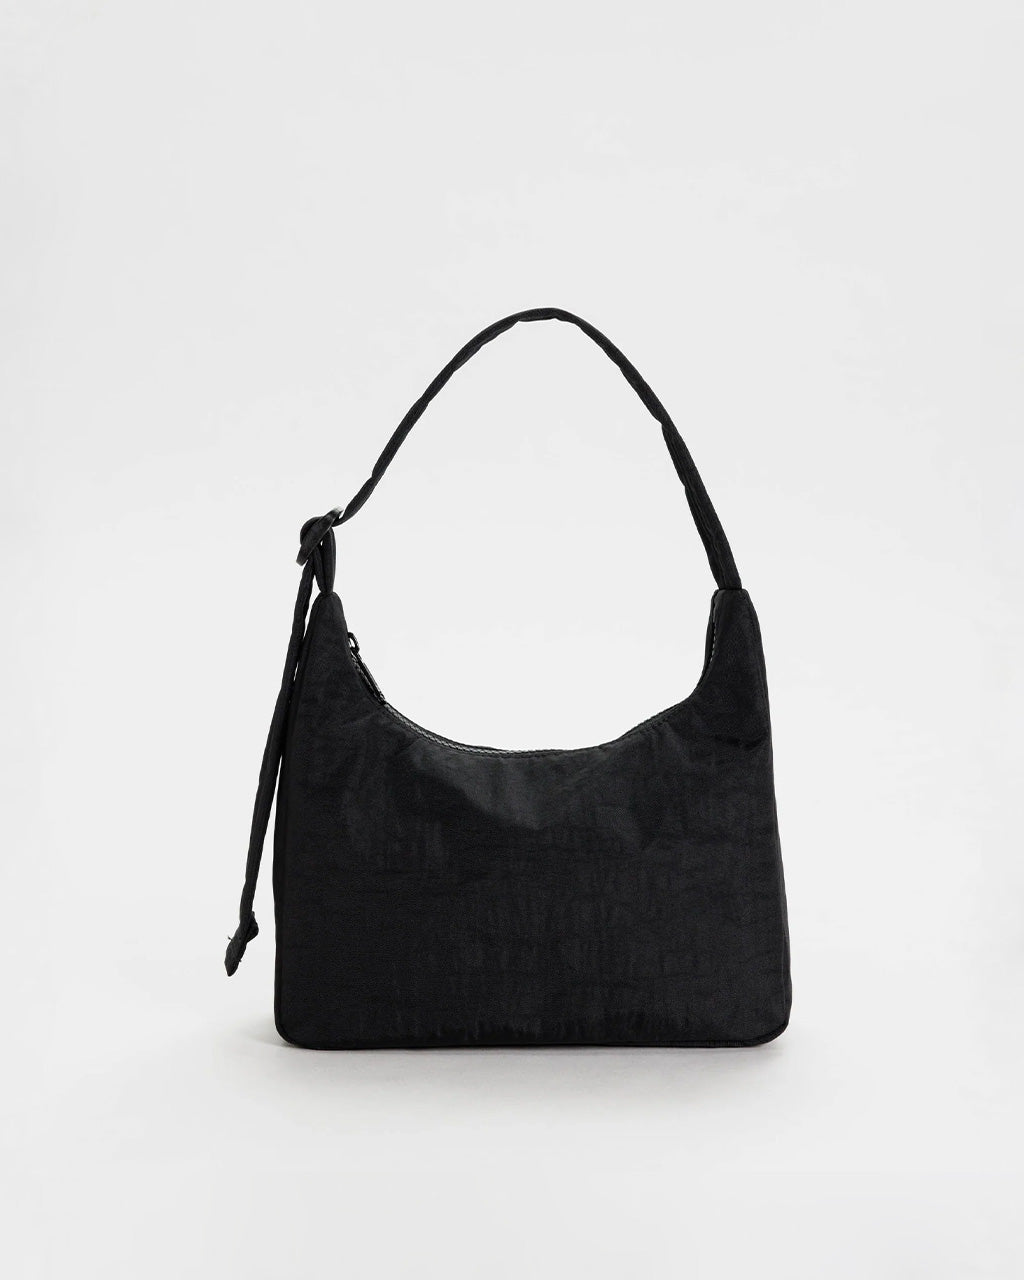 For blooms Reversible Leather Tote Medium Bag -  Sweden